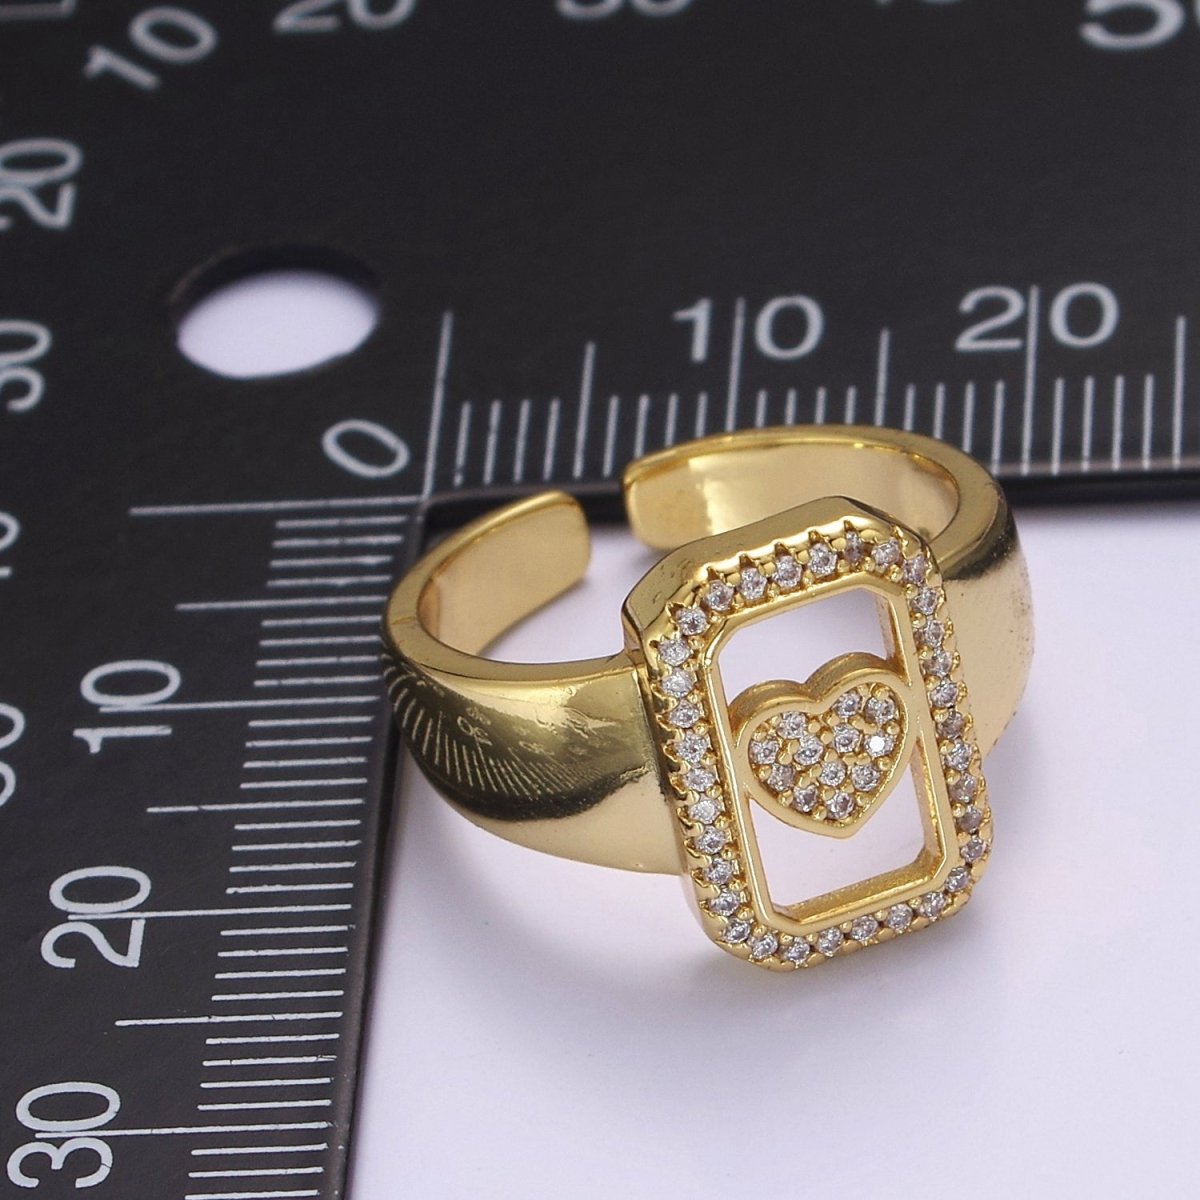 Chunky Gold Heart ring CZ Heart ring, trendy heart ring, Silver heart ring, Big Tag Heart Jewelry O-2045 O-2046 - DLUXCA